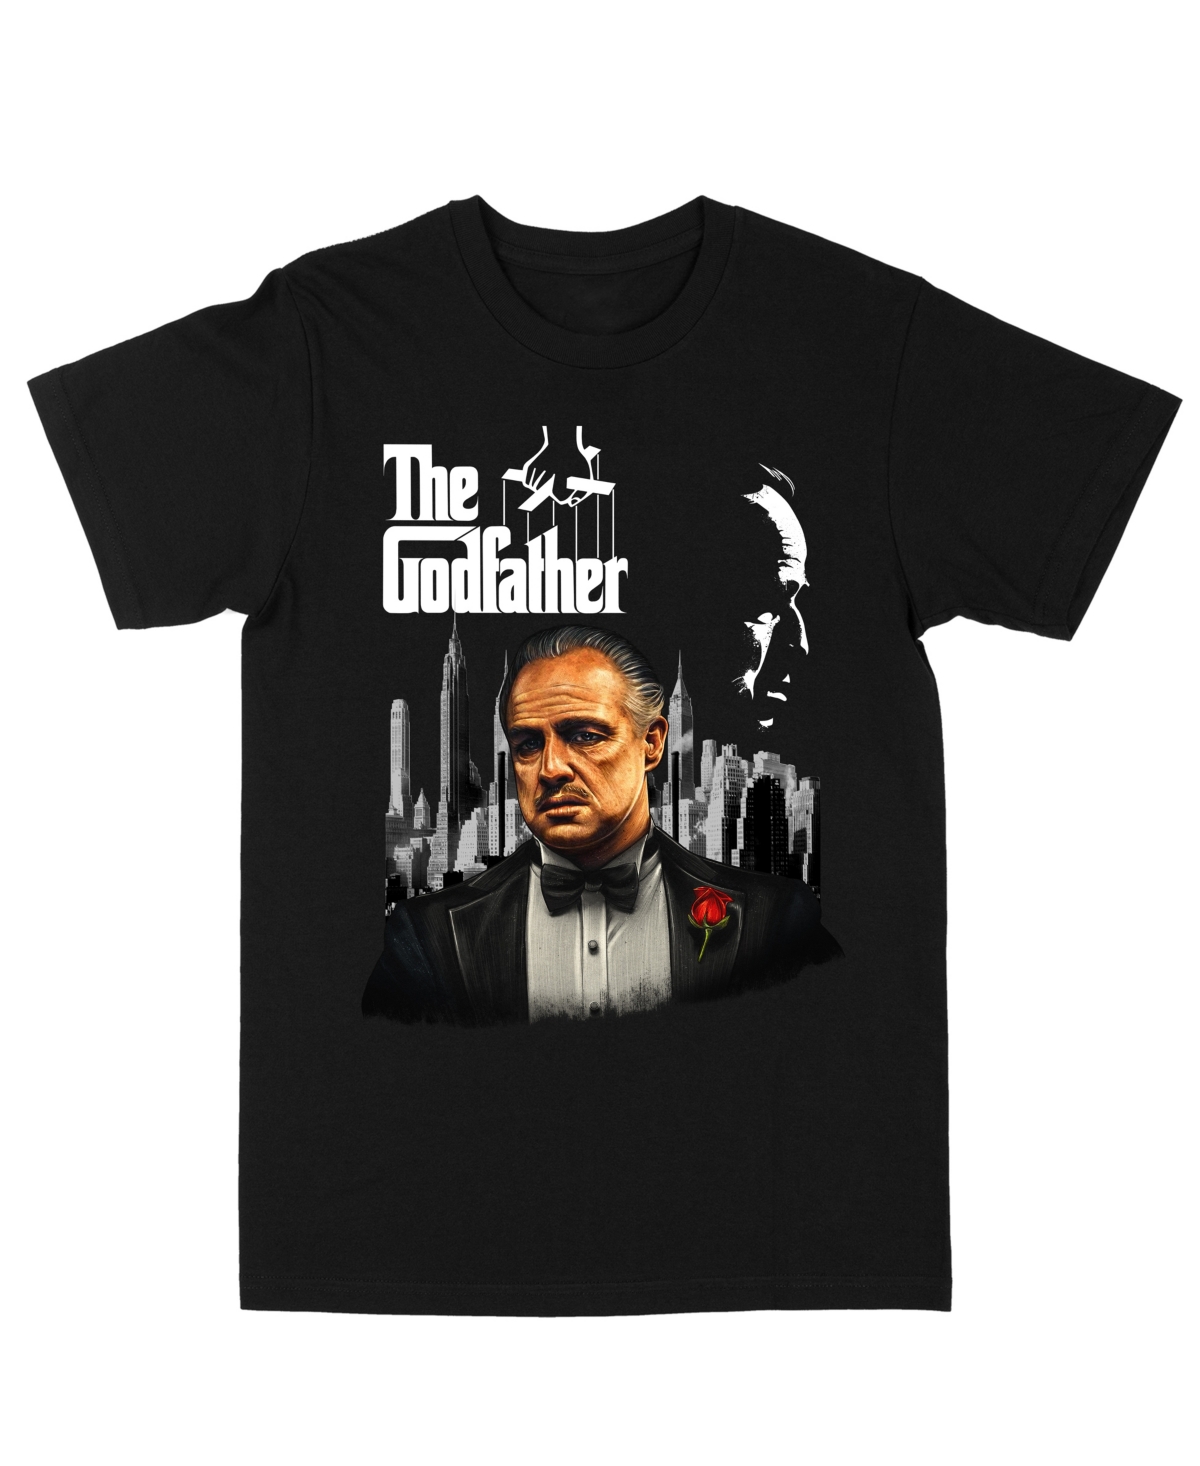 Men's Vito Nyc The Godfather T-shirt - Black